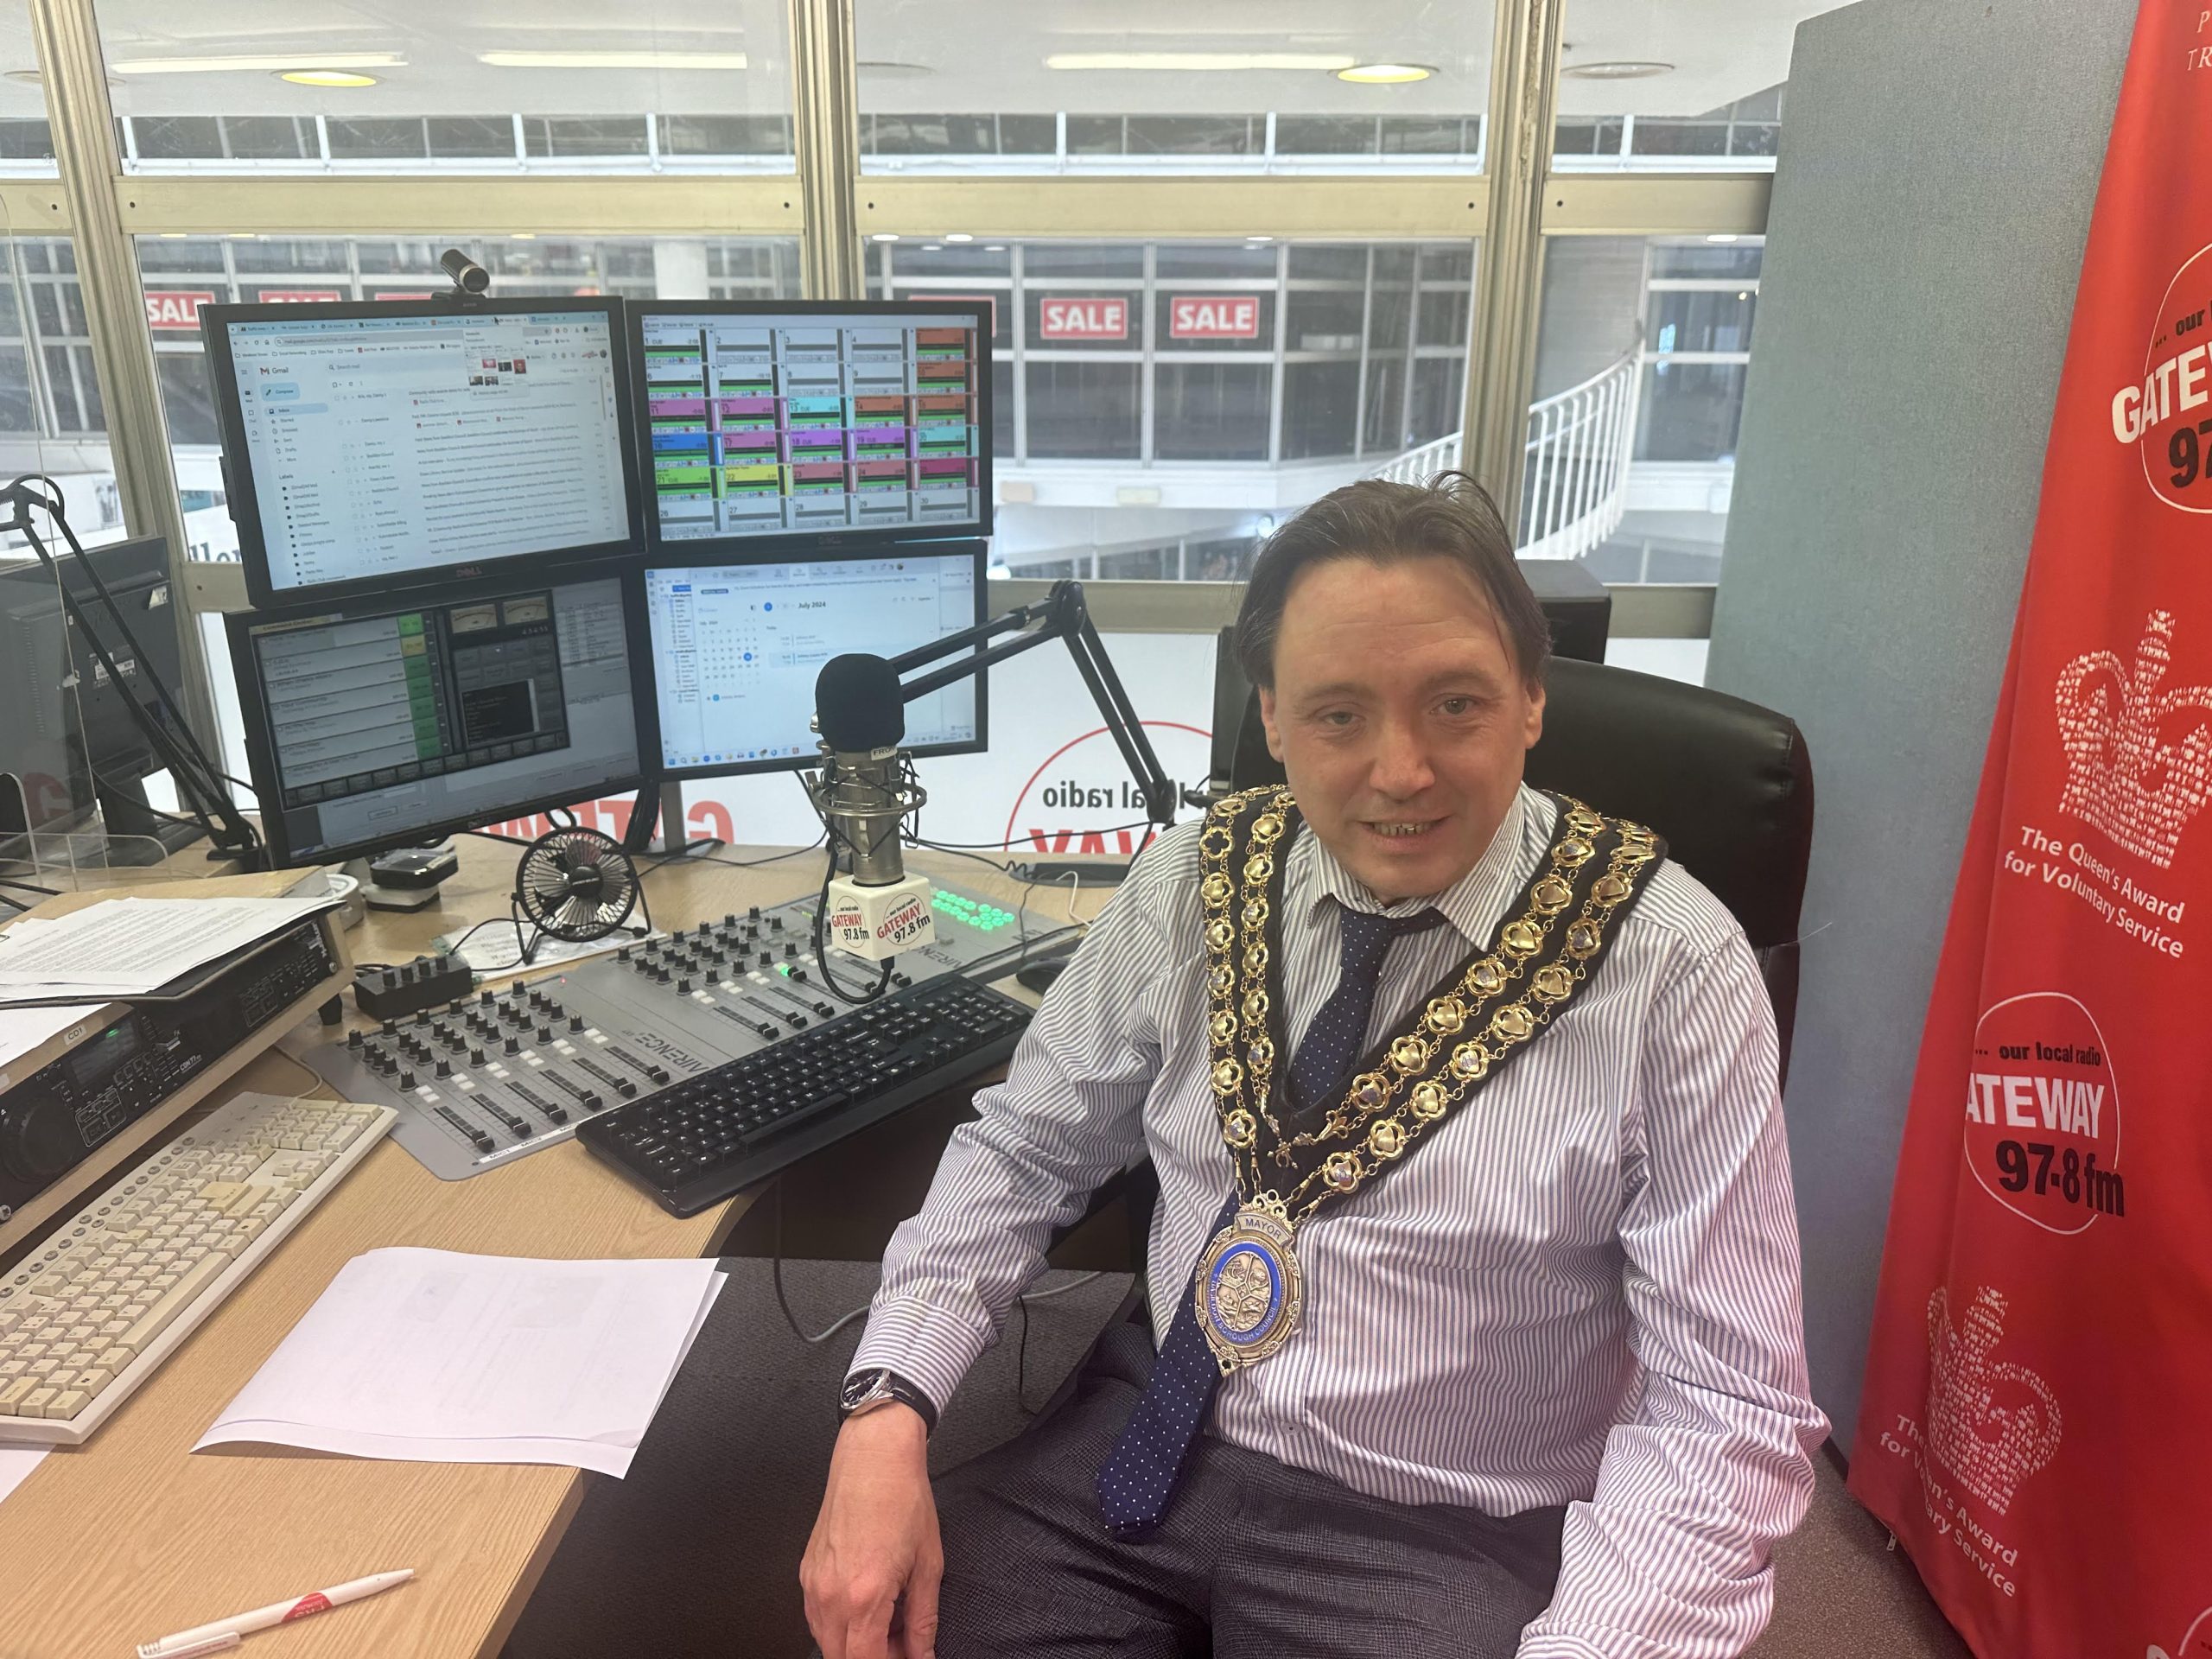 Featured image for “Basildon Mayor Allan Davies speaks to Gateway 97.8”